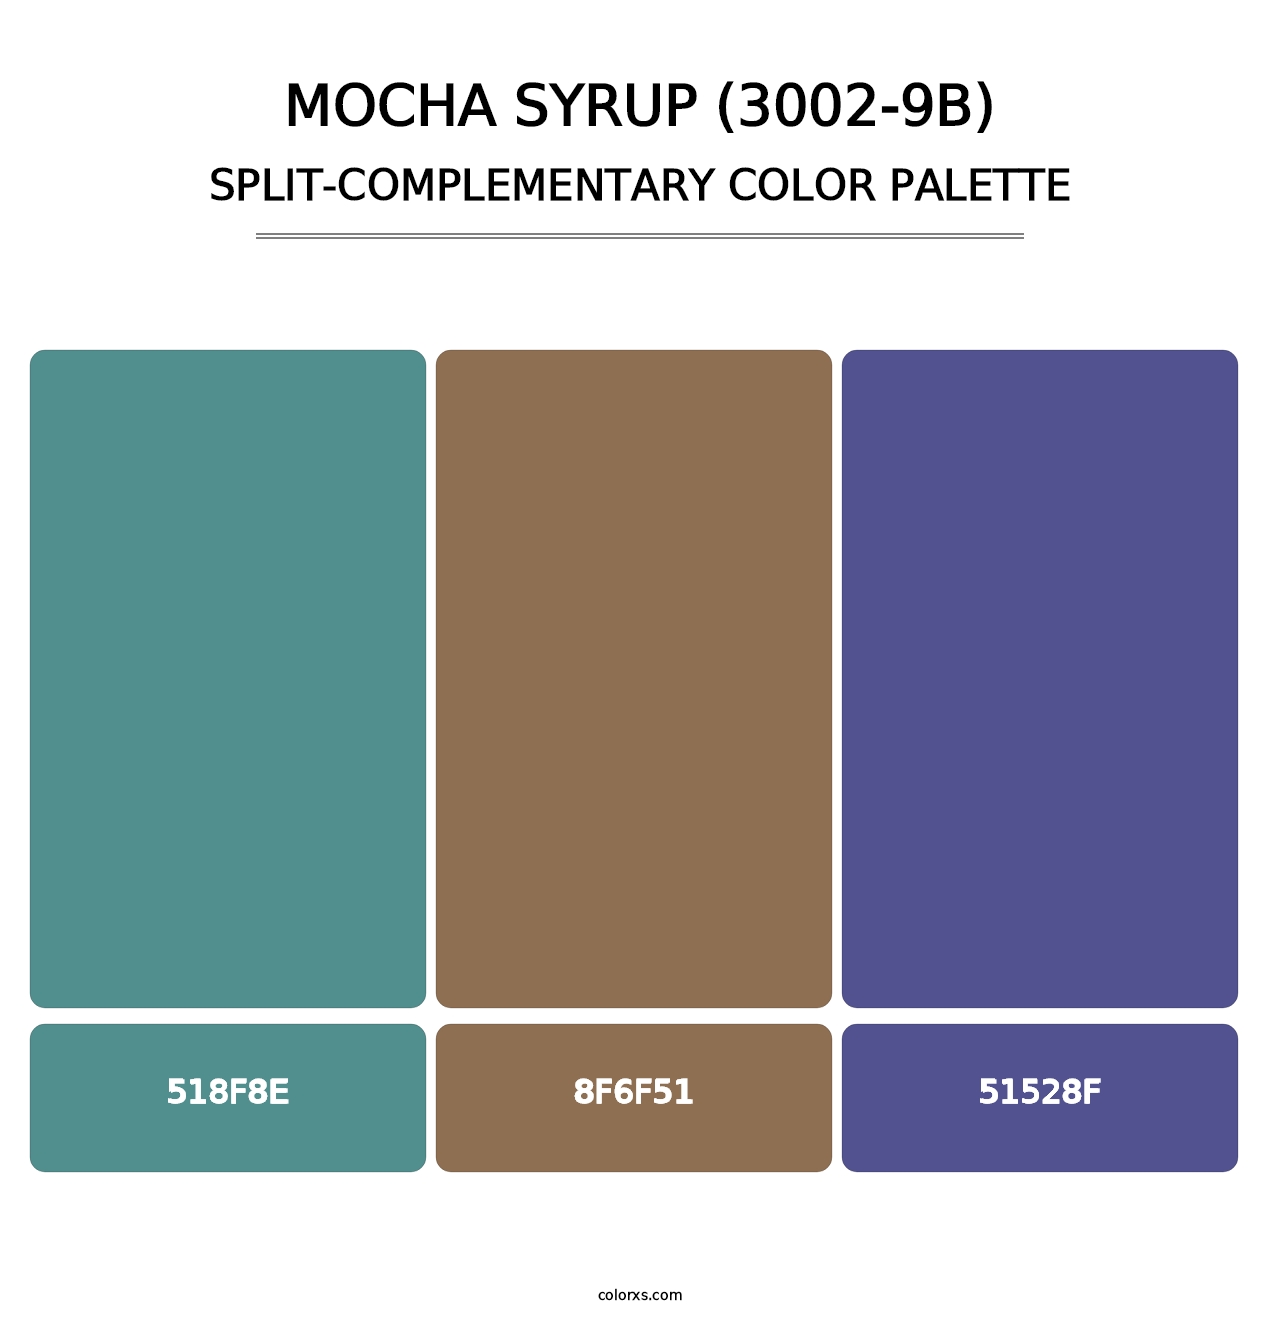 Mocha Syrup (3002-9B) - Split-Complementary Color Palette